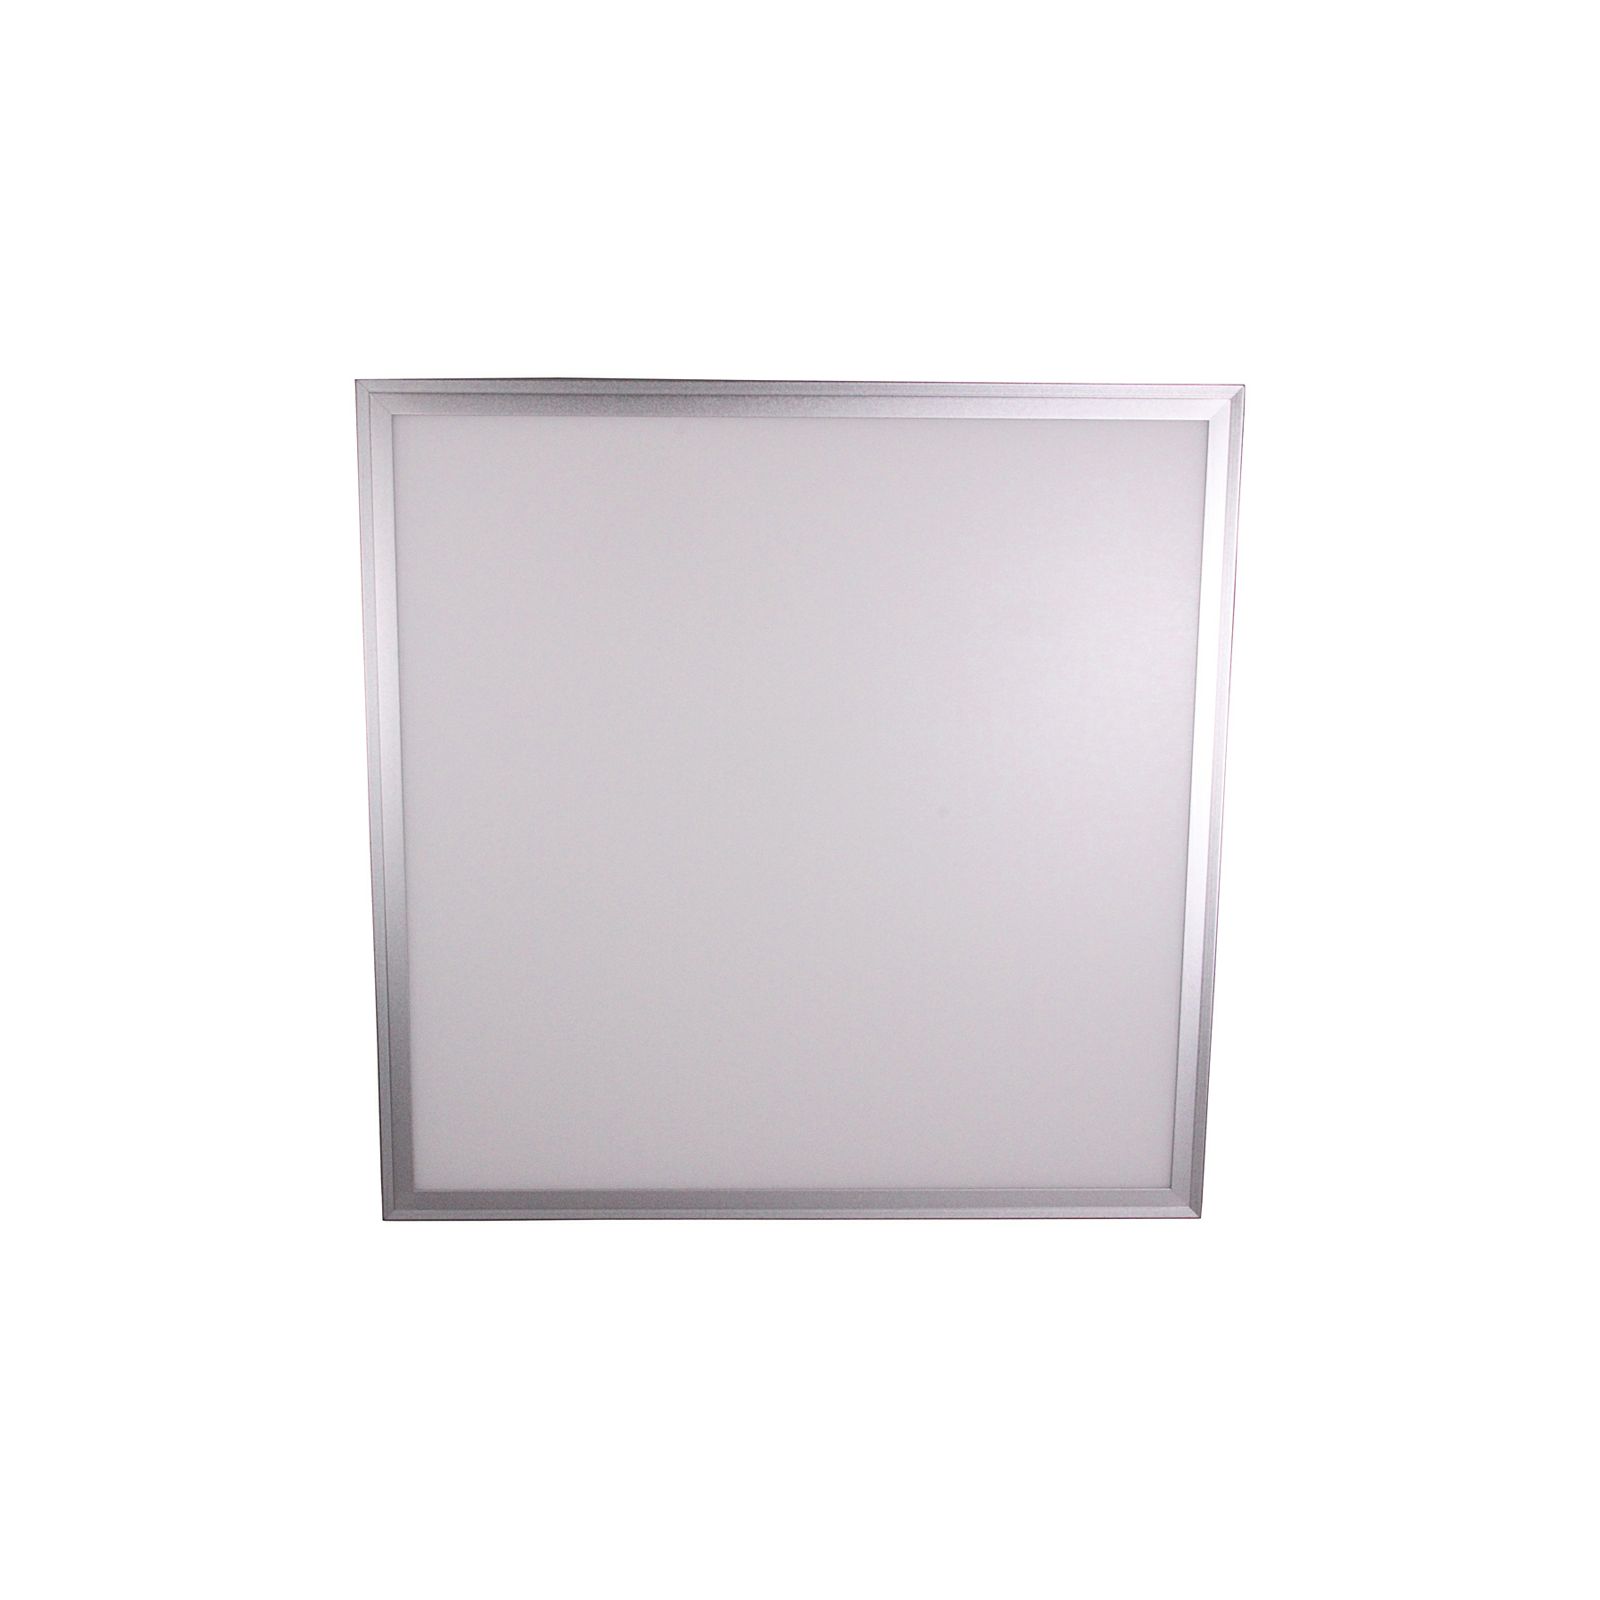 Patona LED panel 600x600x9 frame trasnformer 36W 3300lm 4000-4500K natur white AC 200-240V Frame Transformer complet set 60x60x0,9cm